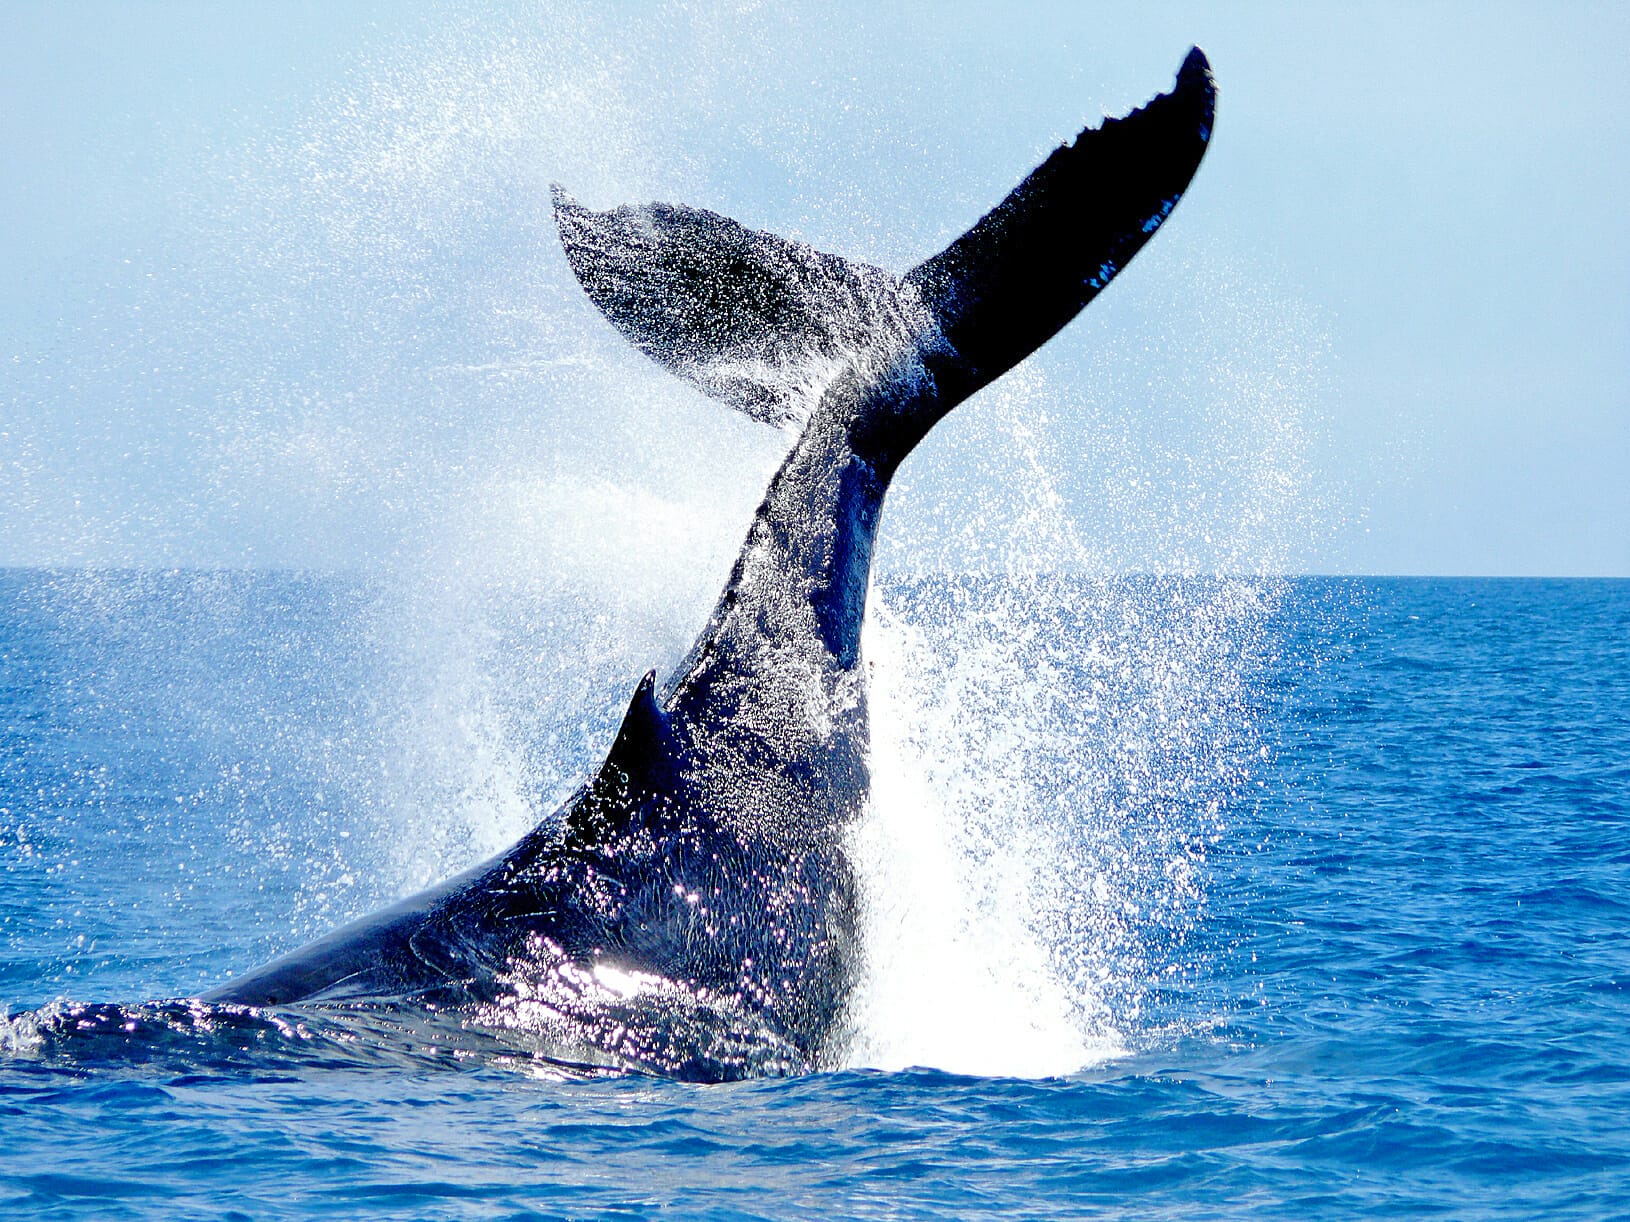 Humpback Whale doing a "Karate Chop" splash